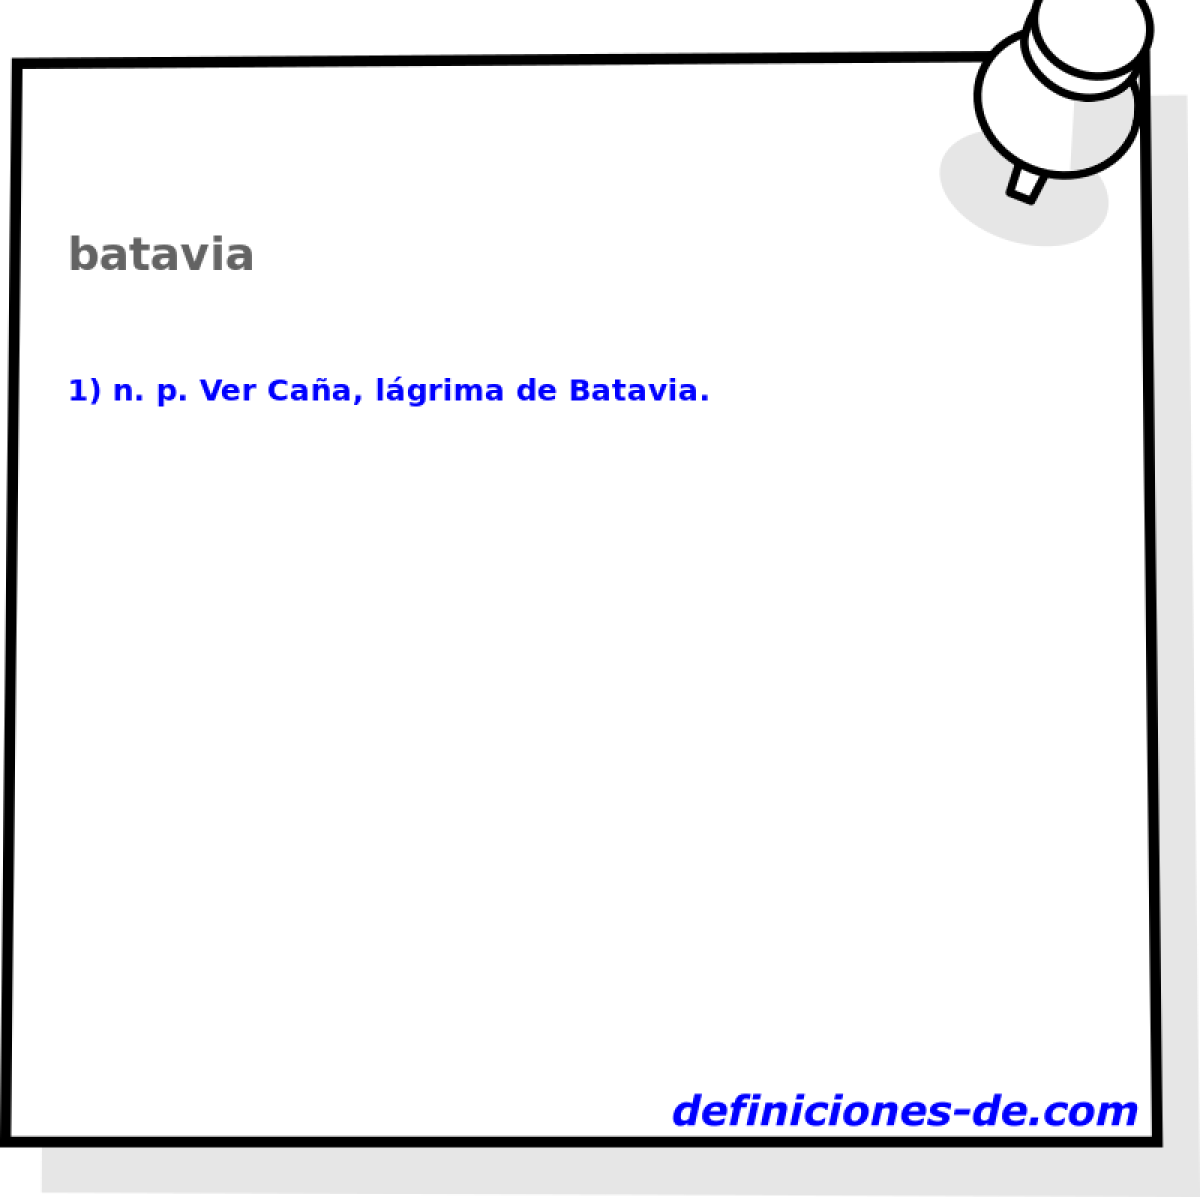 batavia 